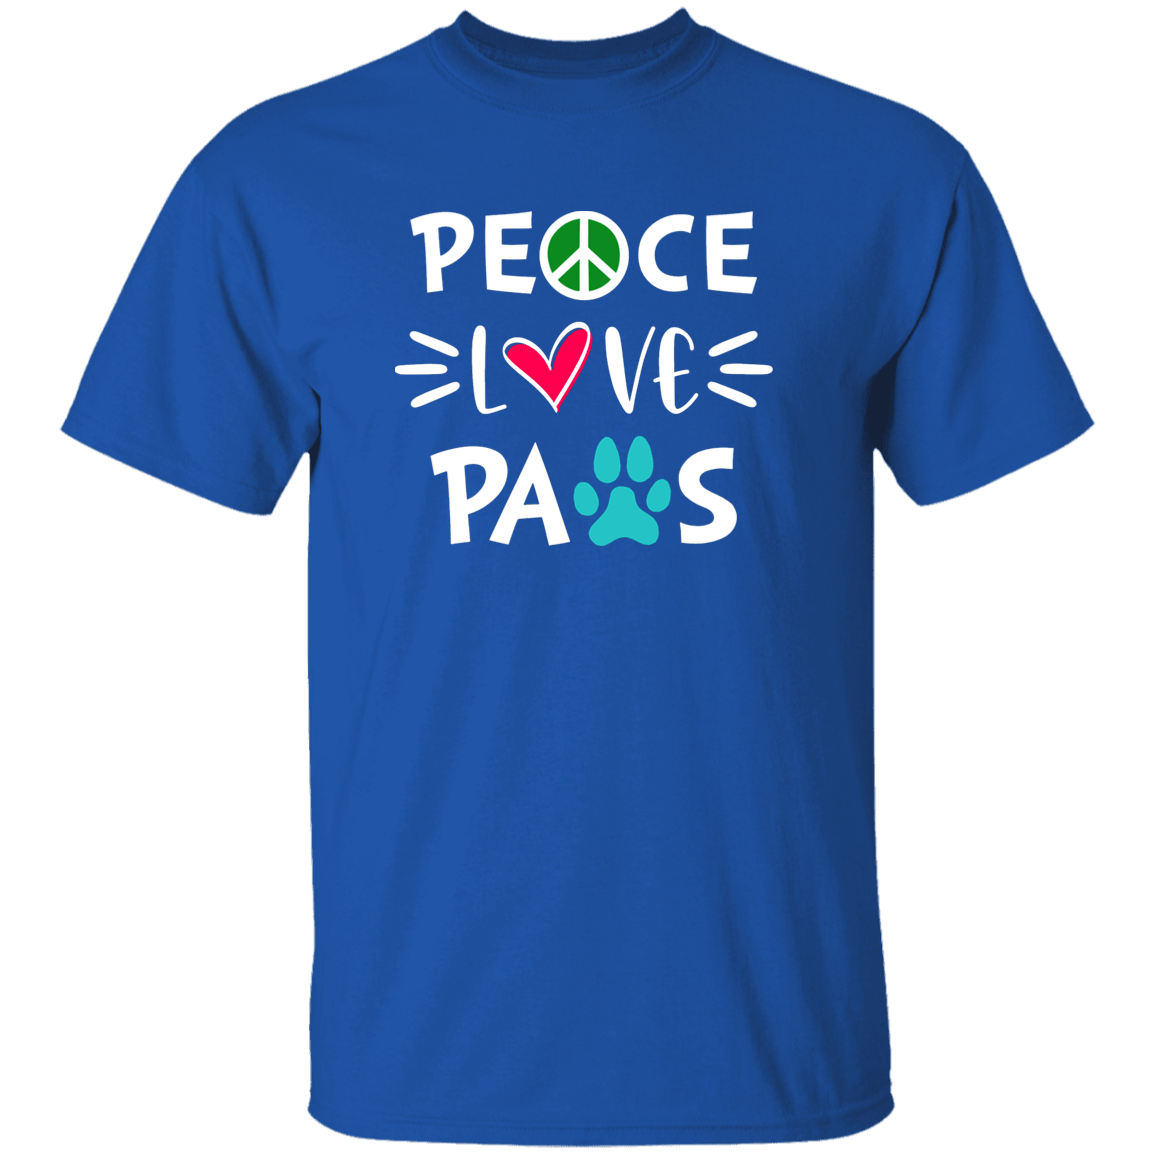 Peace Love Paws - T Shirt.